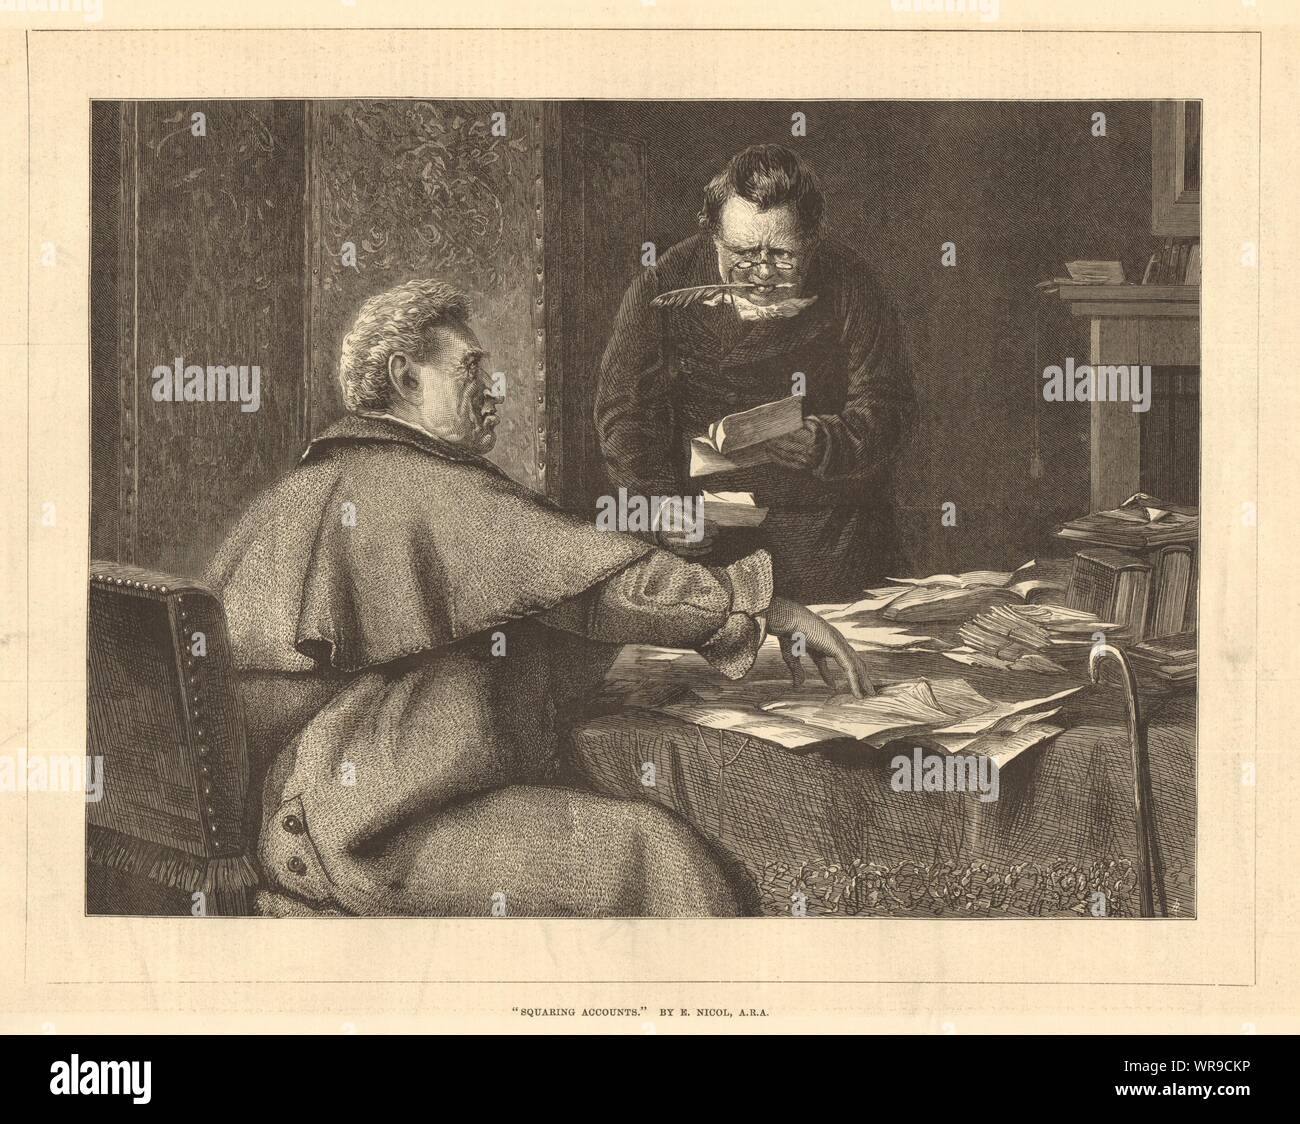 Squaring accounts', by E. Nicol, A. R. A. Portraits. Finance 1876 ILN print Stock Photo